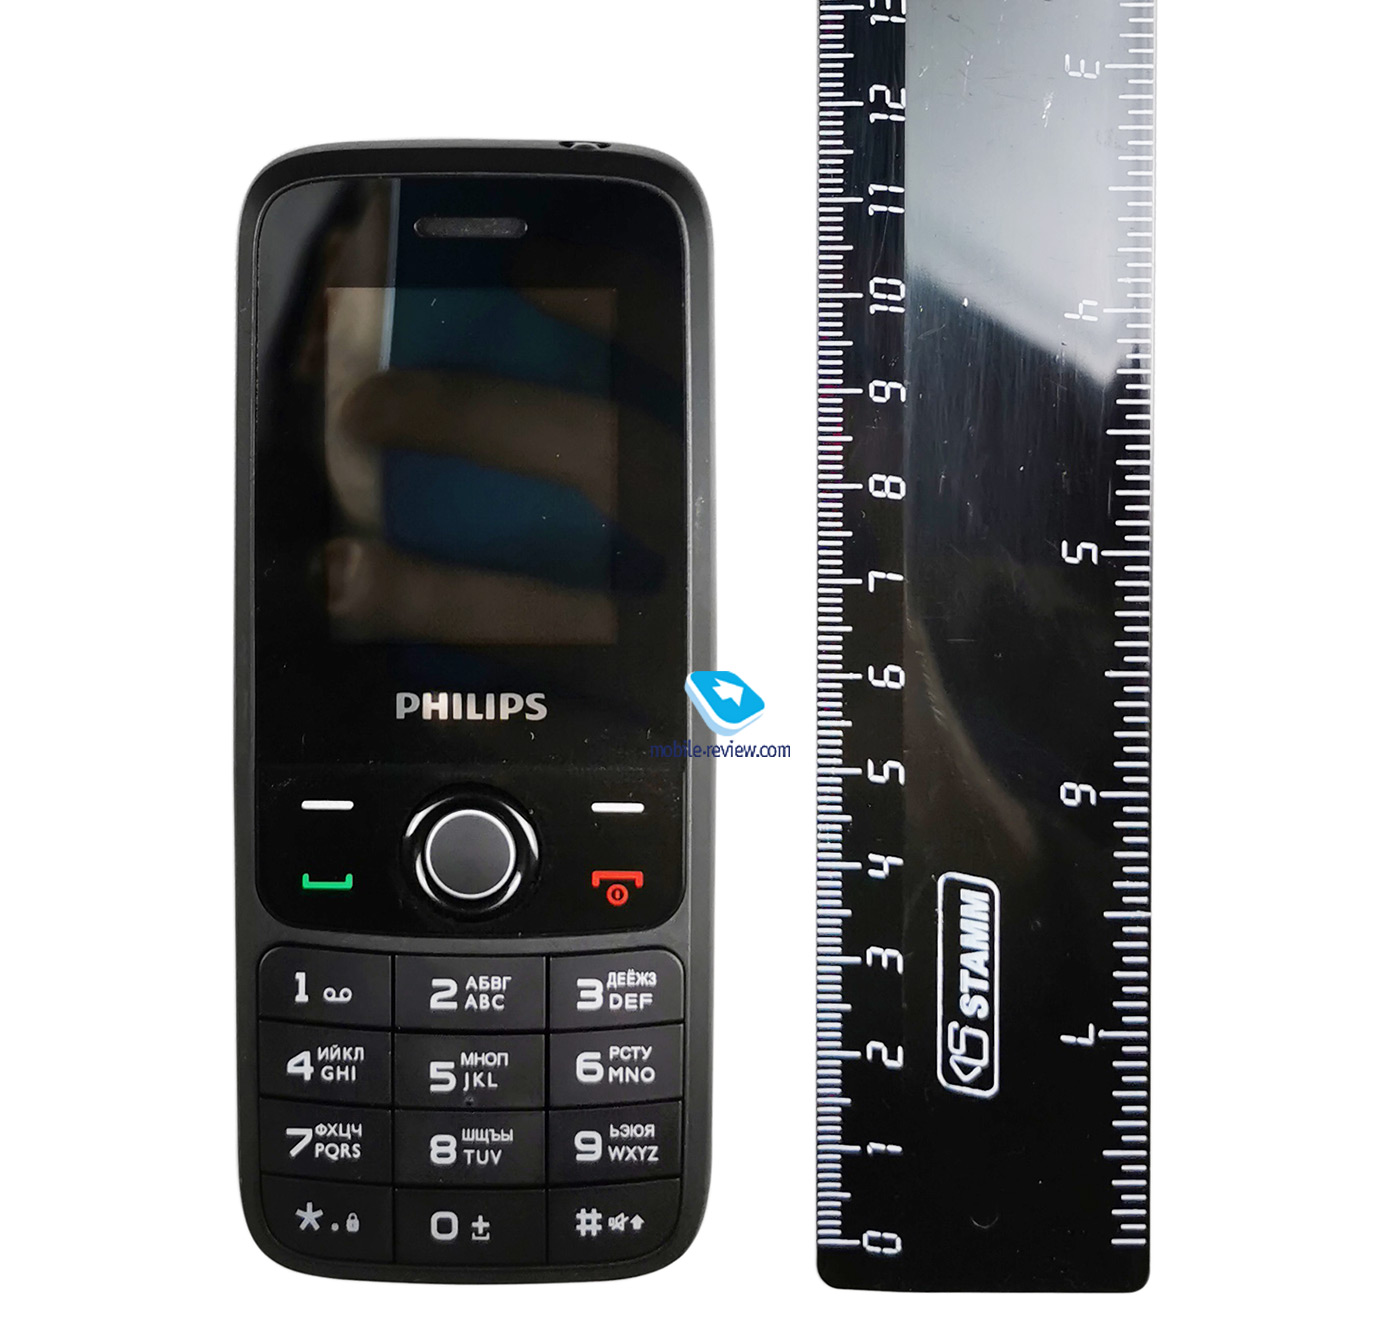    Philips Xenium E117  Xenium E207